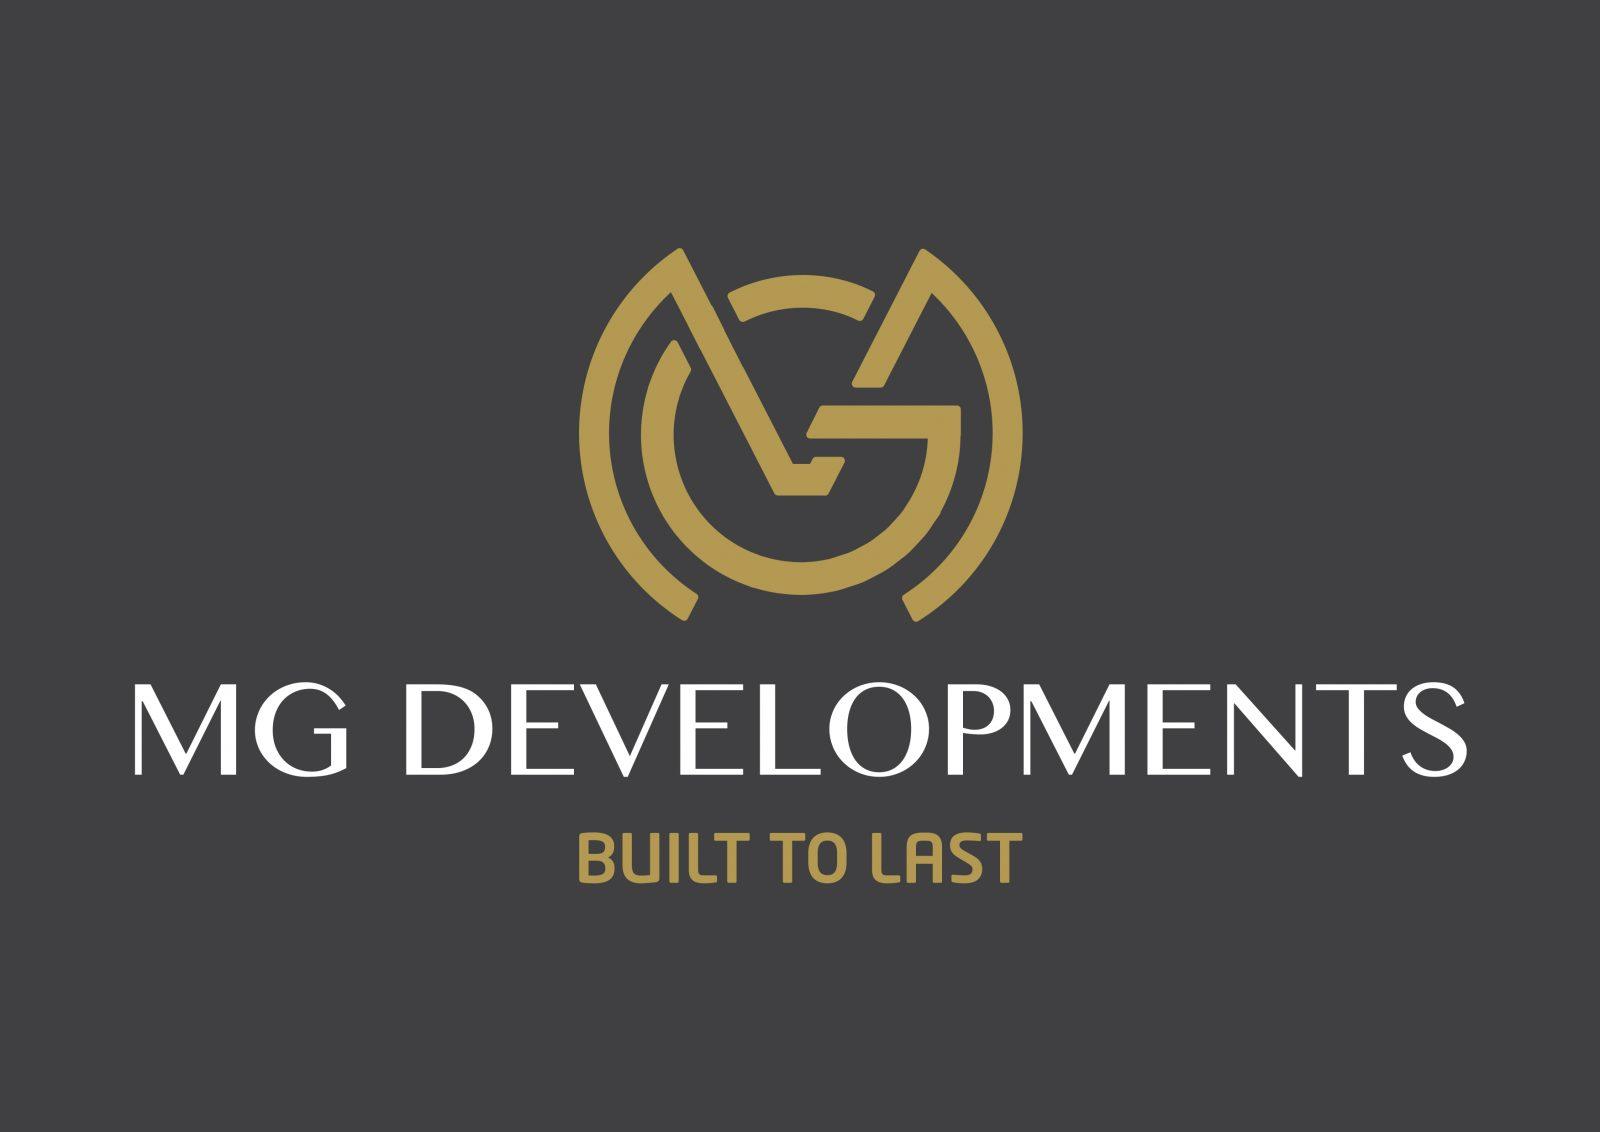 MG development